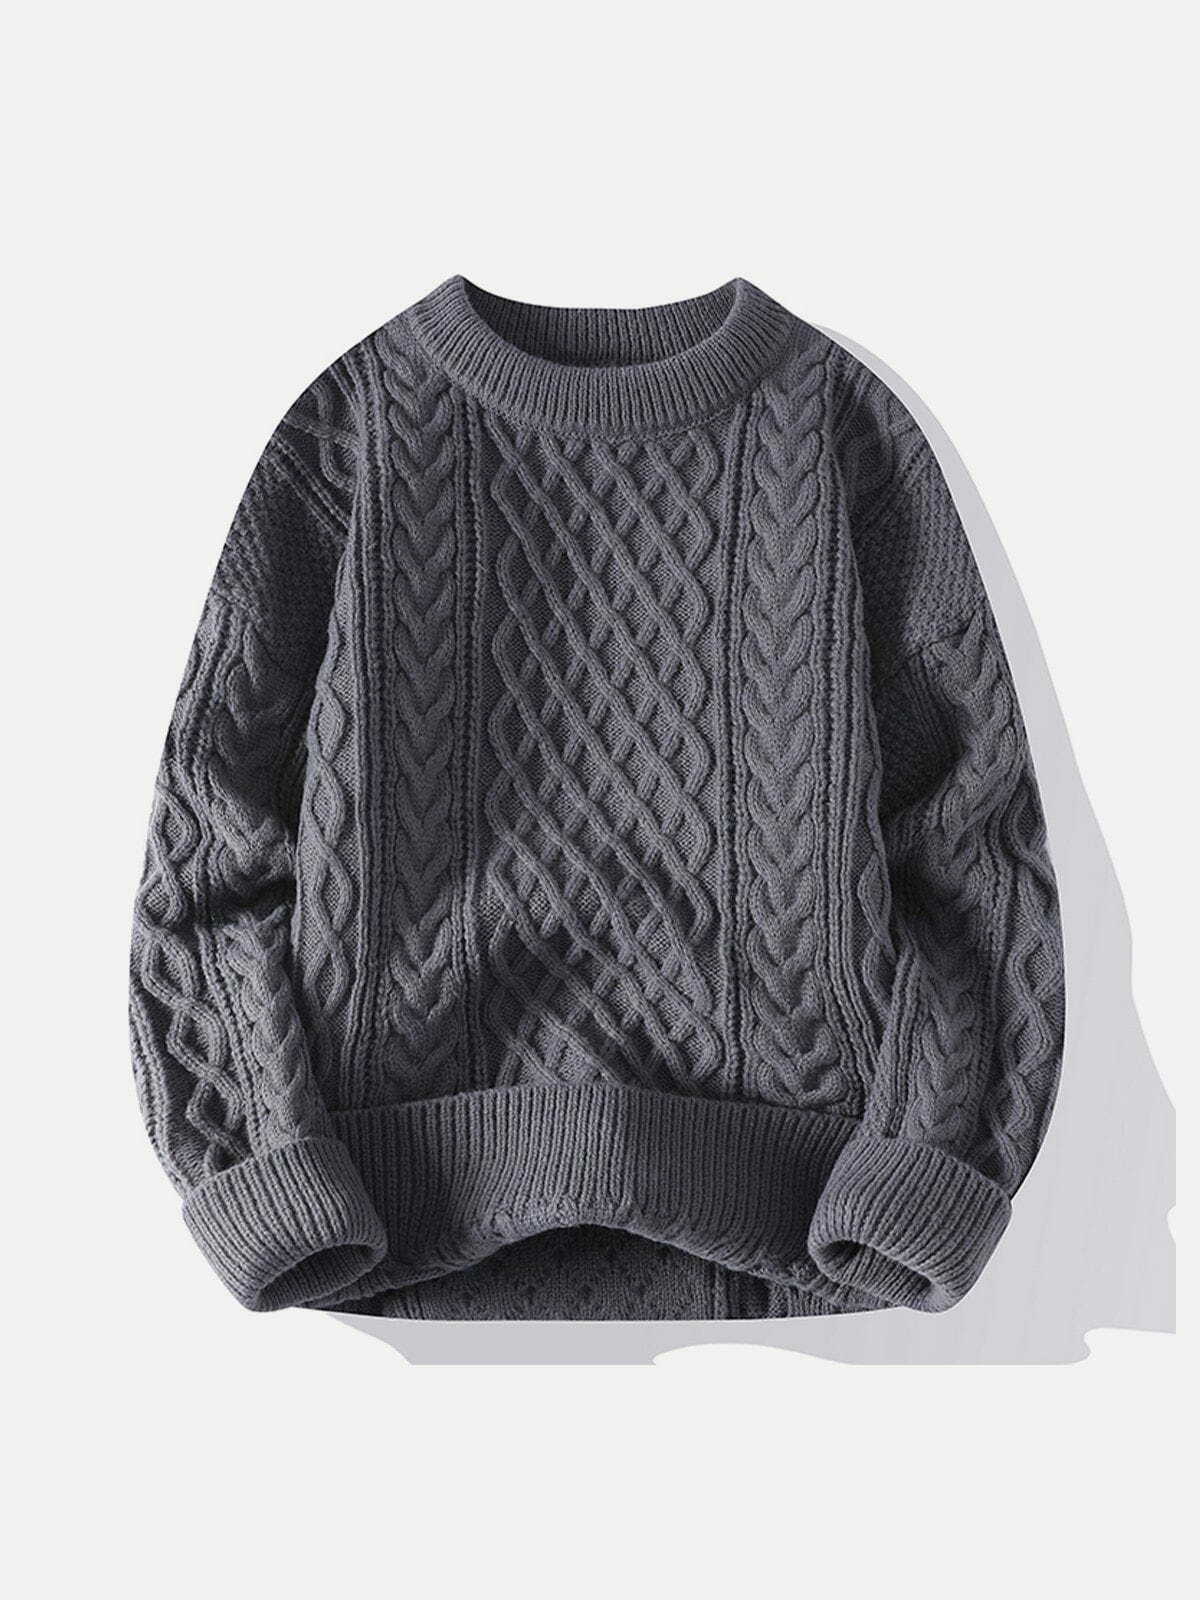 knit personality twist sweater retro & edgy streetwear 5069